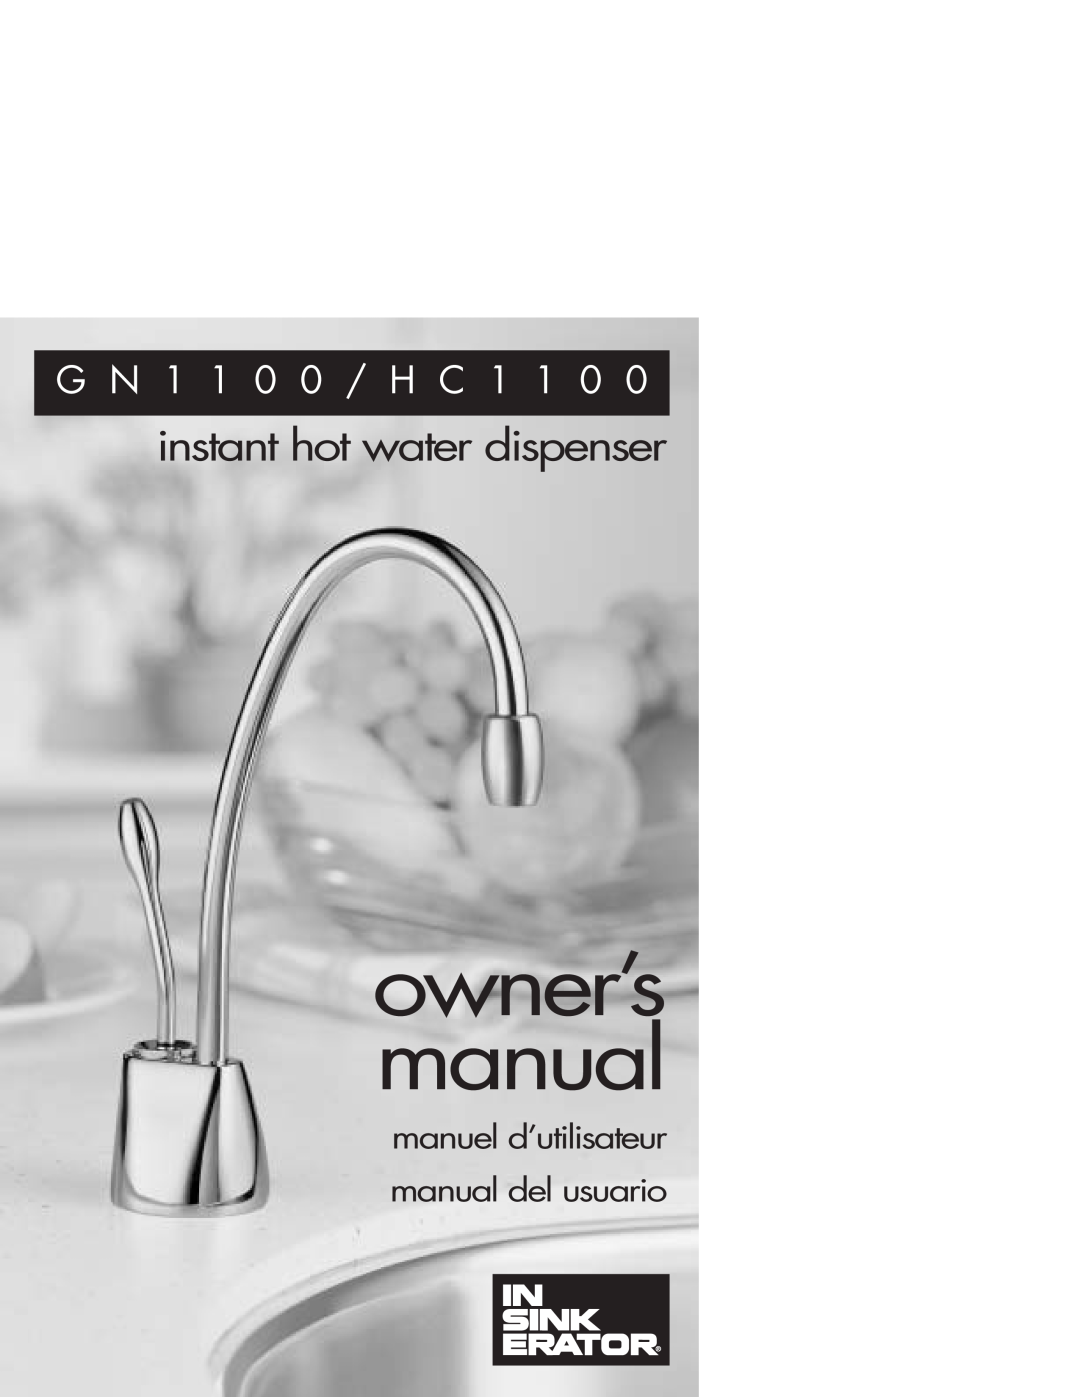 InSinkErator HC1100, GN1100 owner manual owner’s manual, instant hot water dispenser, G N 1 1 0 0 / H C 